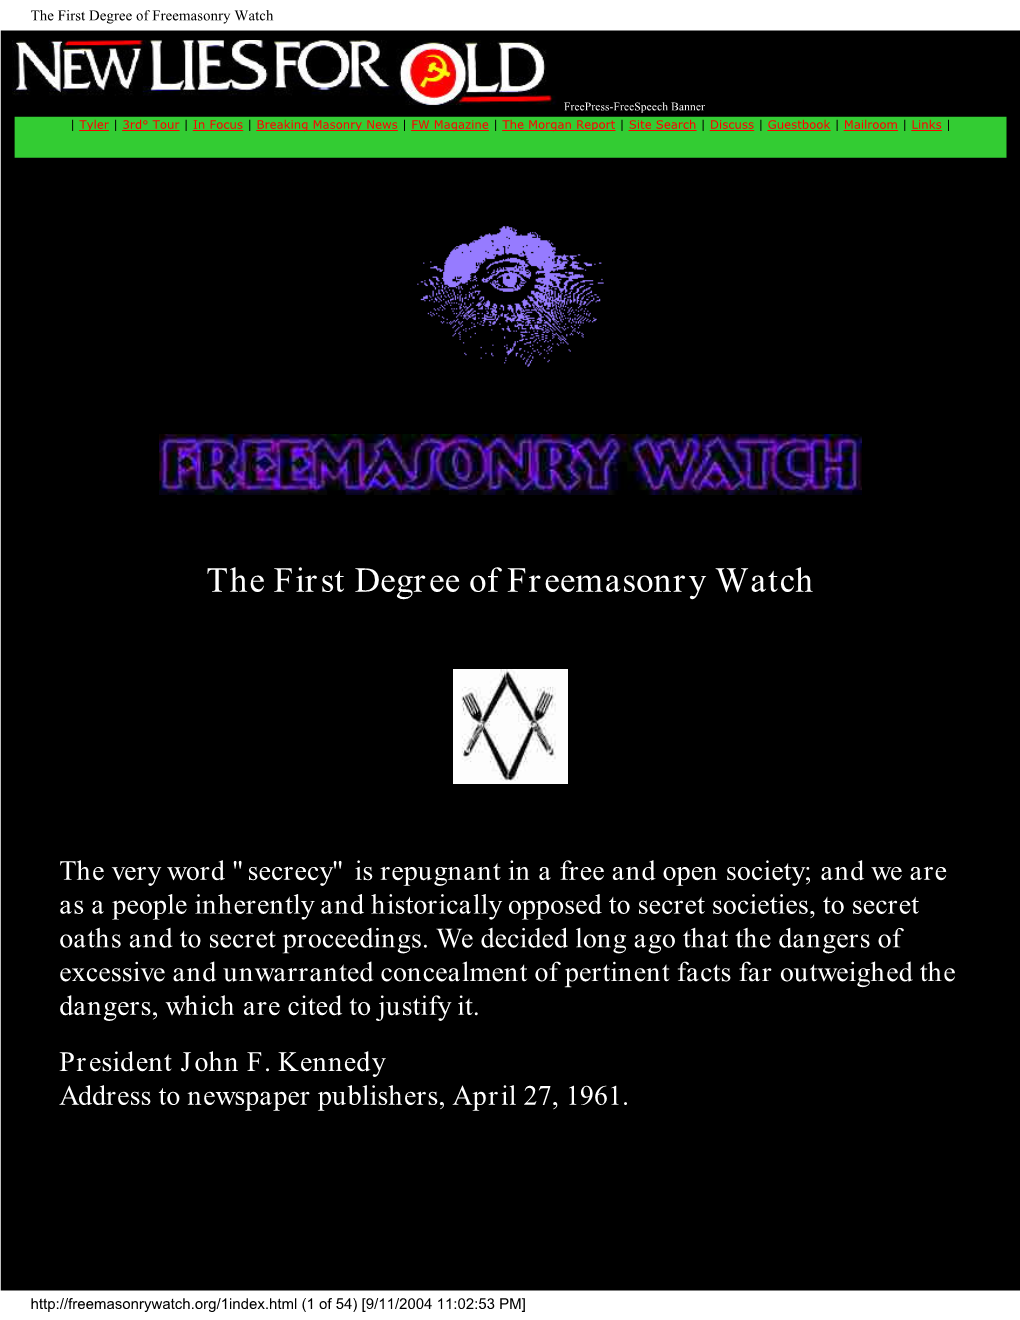 The First Degree of Freemasonry Watch